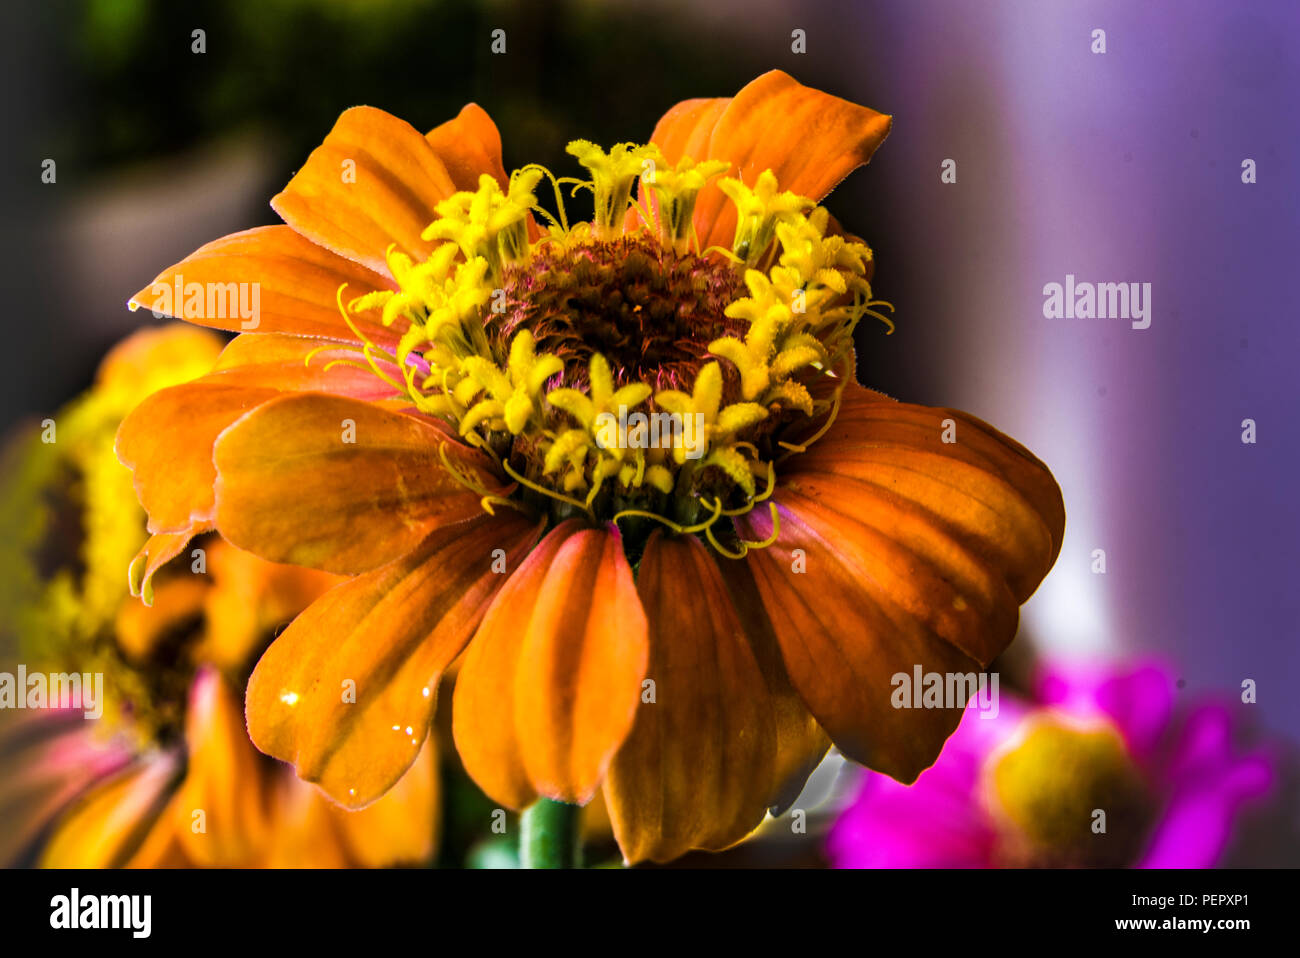 flower close-u of a yellow orange daisy Stock Photo